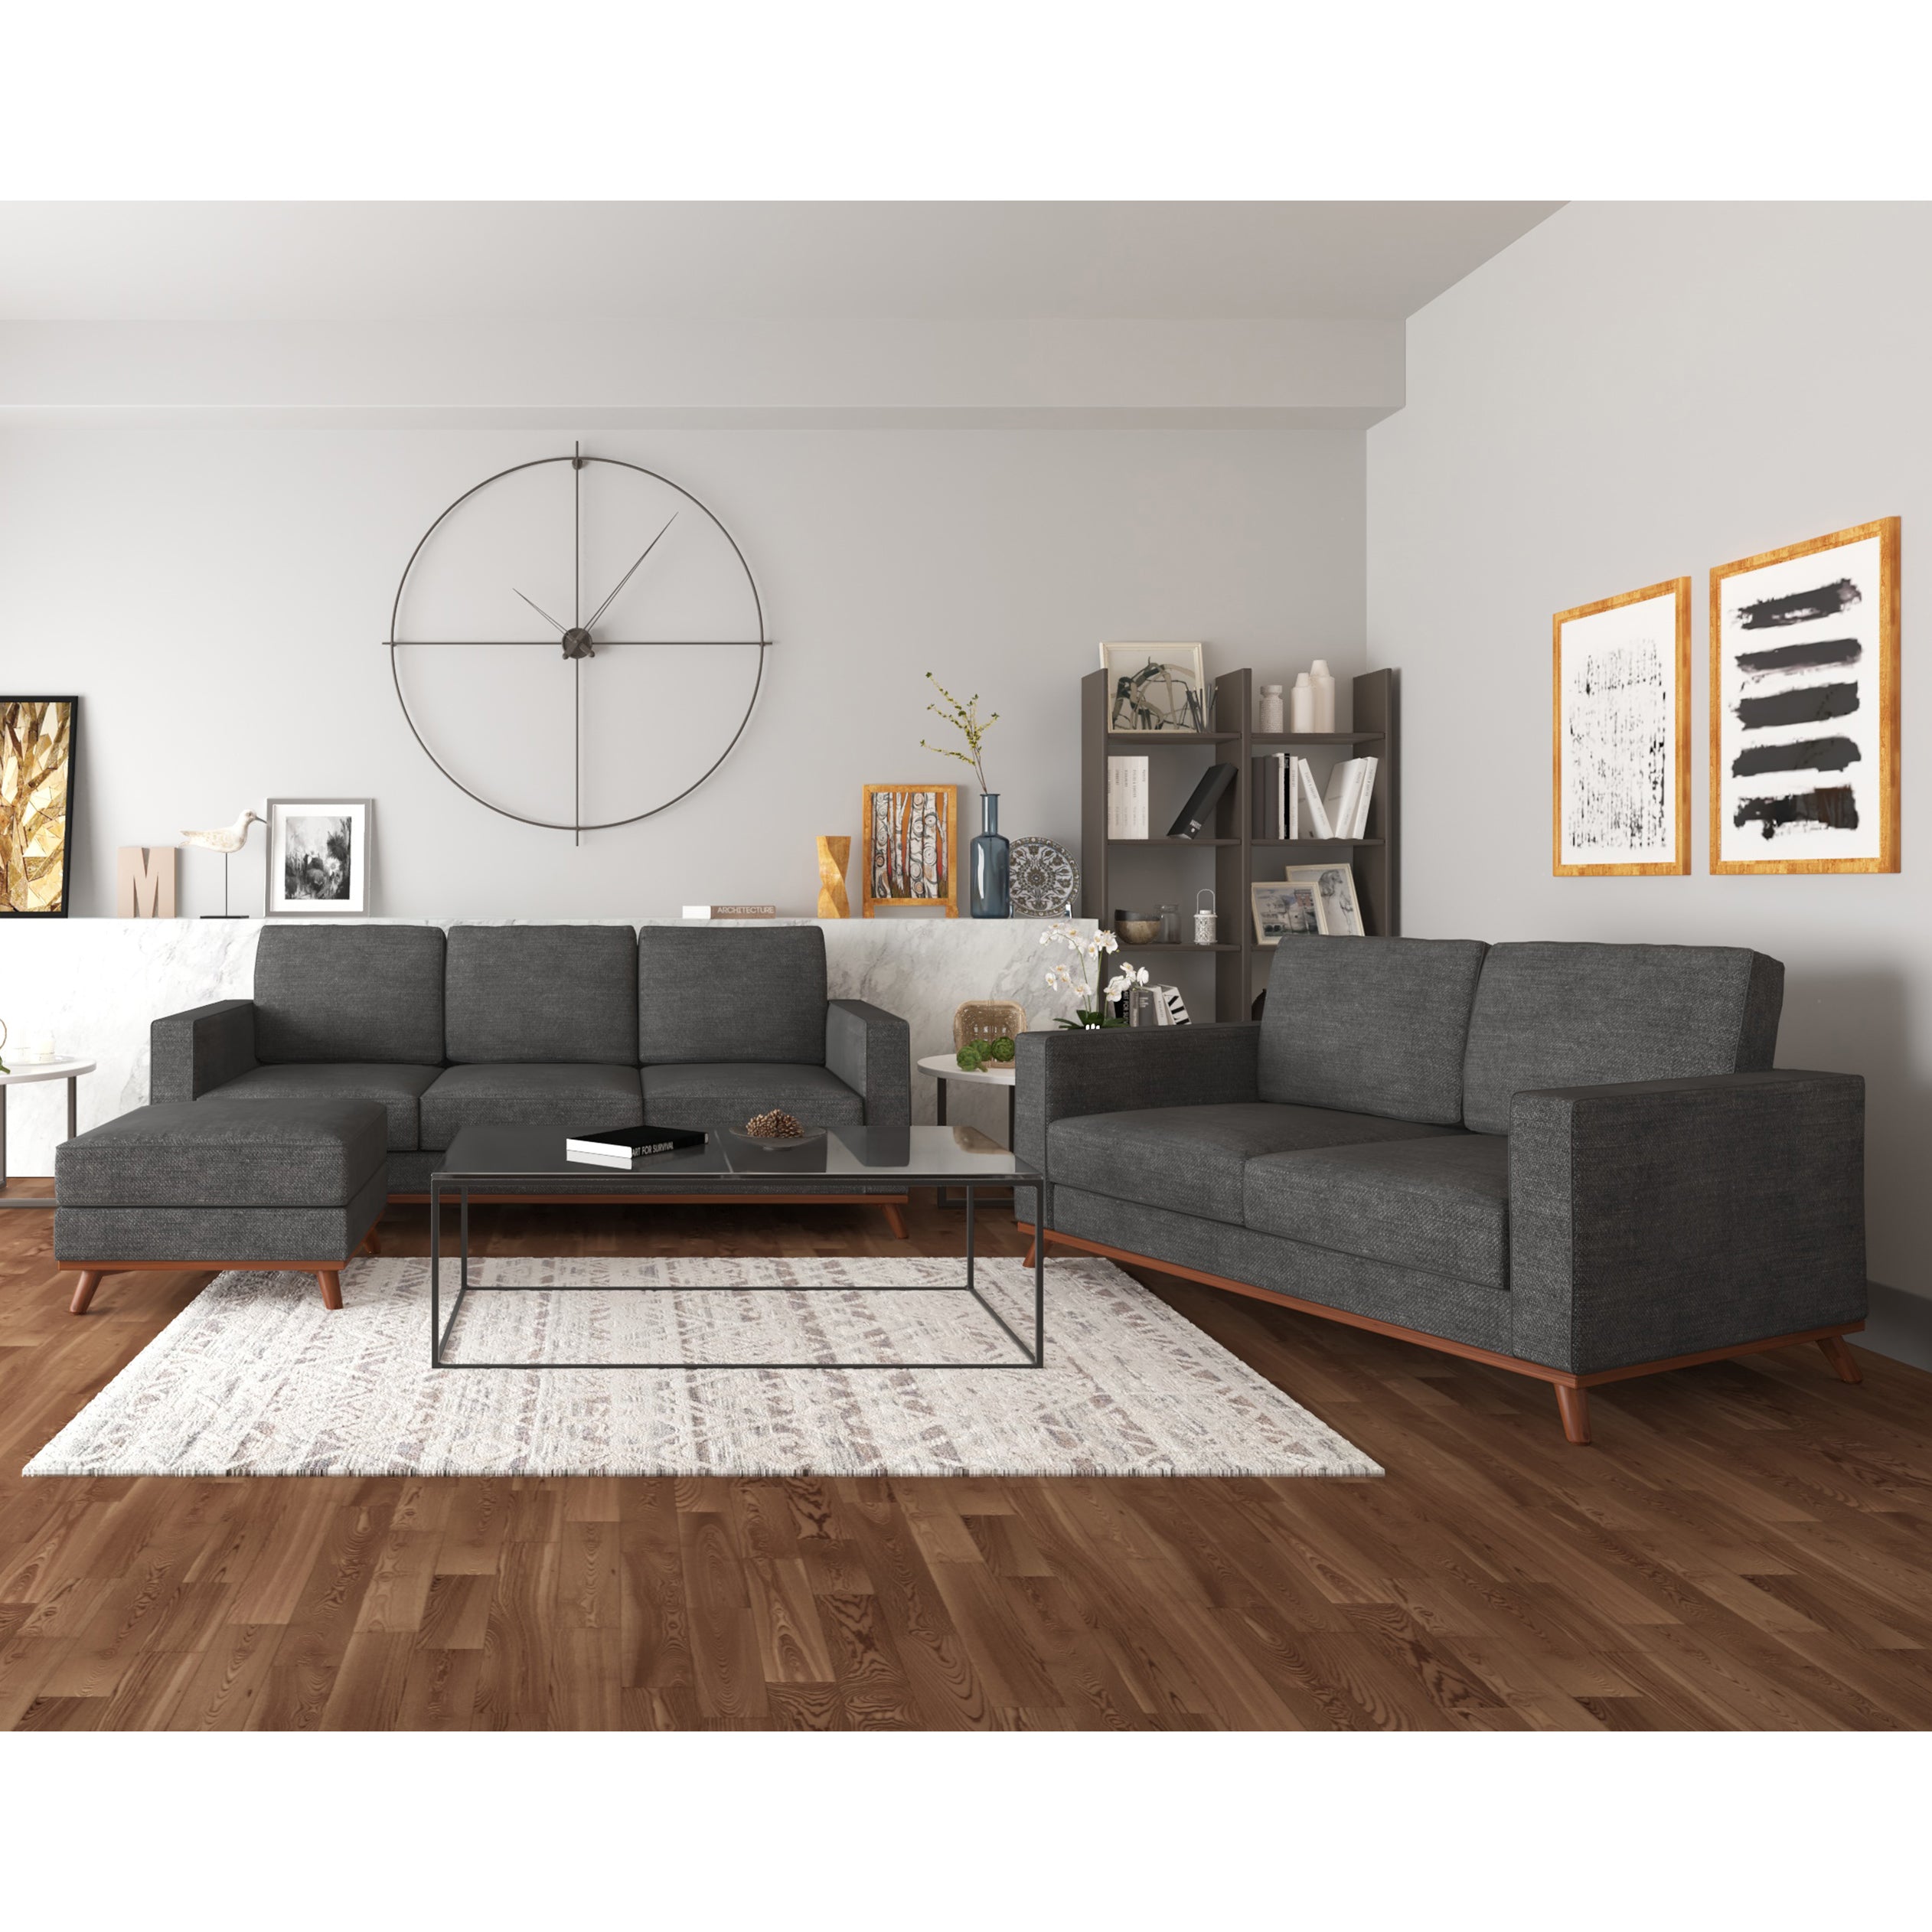 Archer Sofa, Loveseat and Ottoman living room set - SunHaven Home